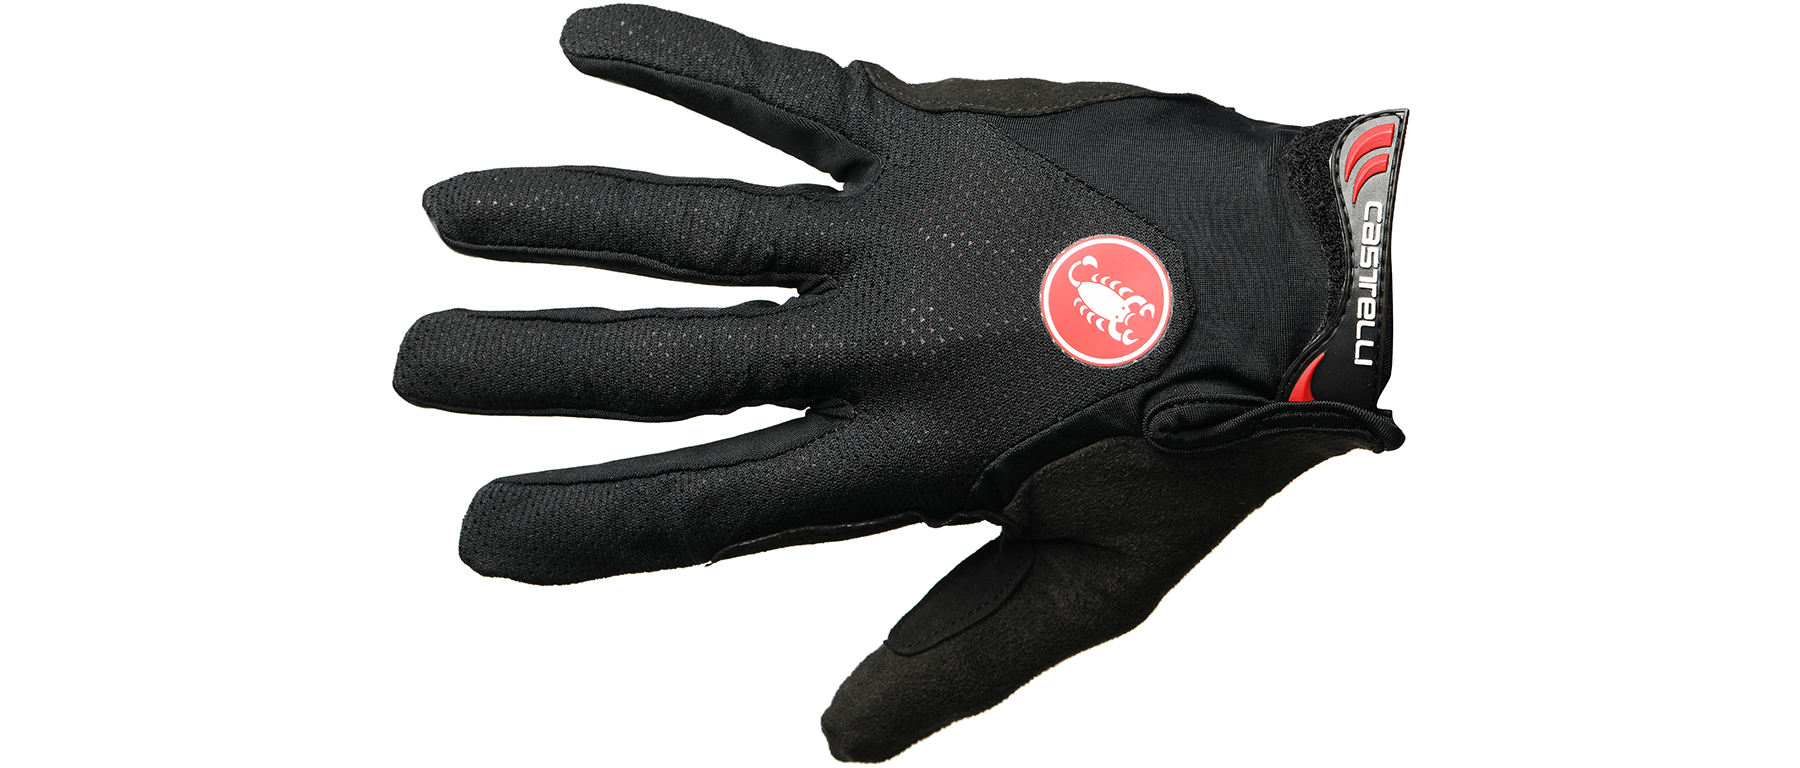 Castelli Arenberg Gel LF Glove